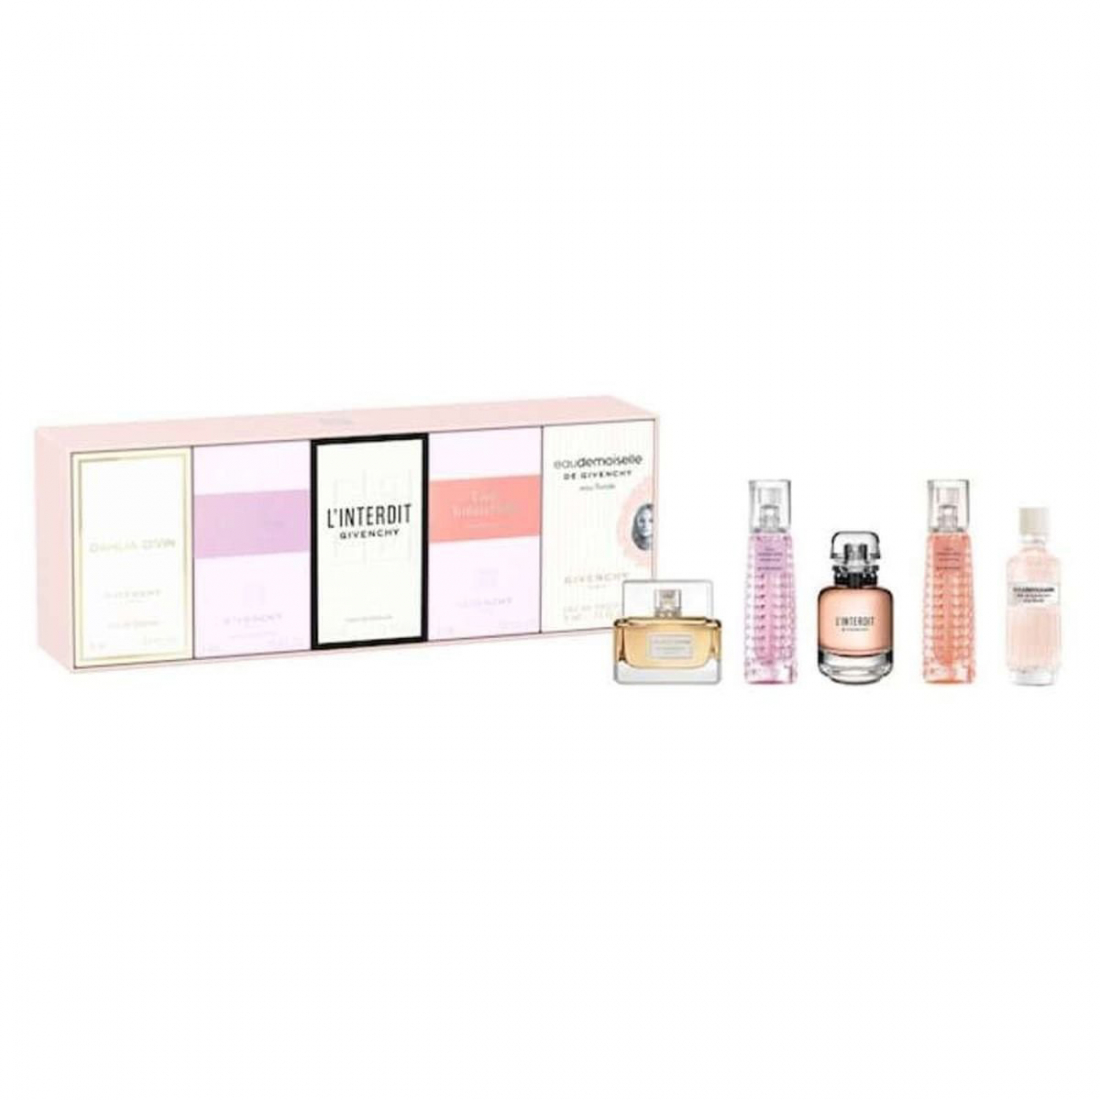 'Givenchy Miniatures' Perfume Set - 5 Pieces